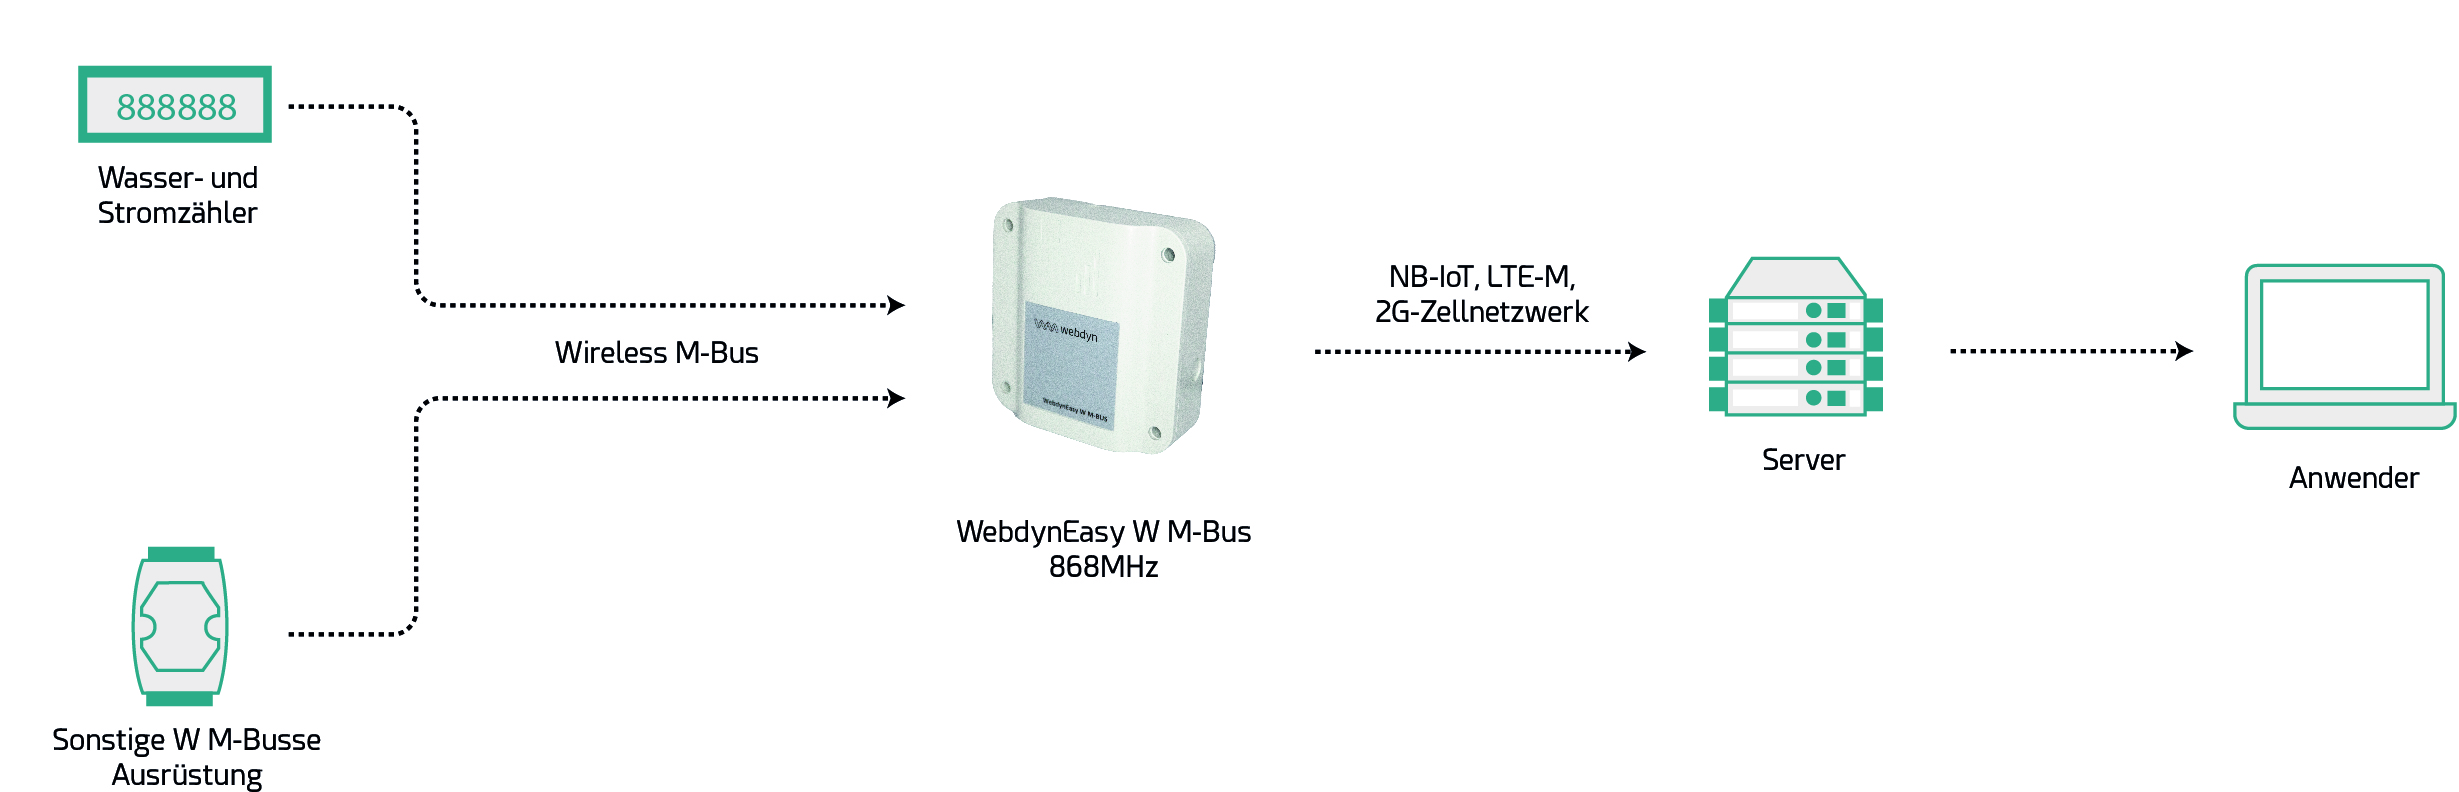 Architecture - WebdynEasy W M-Bus 868MHz-DE